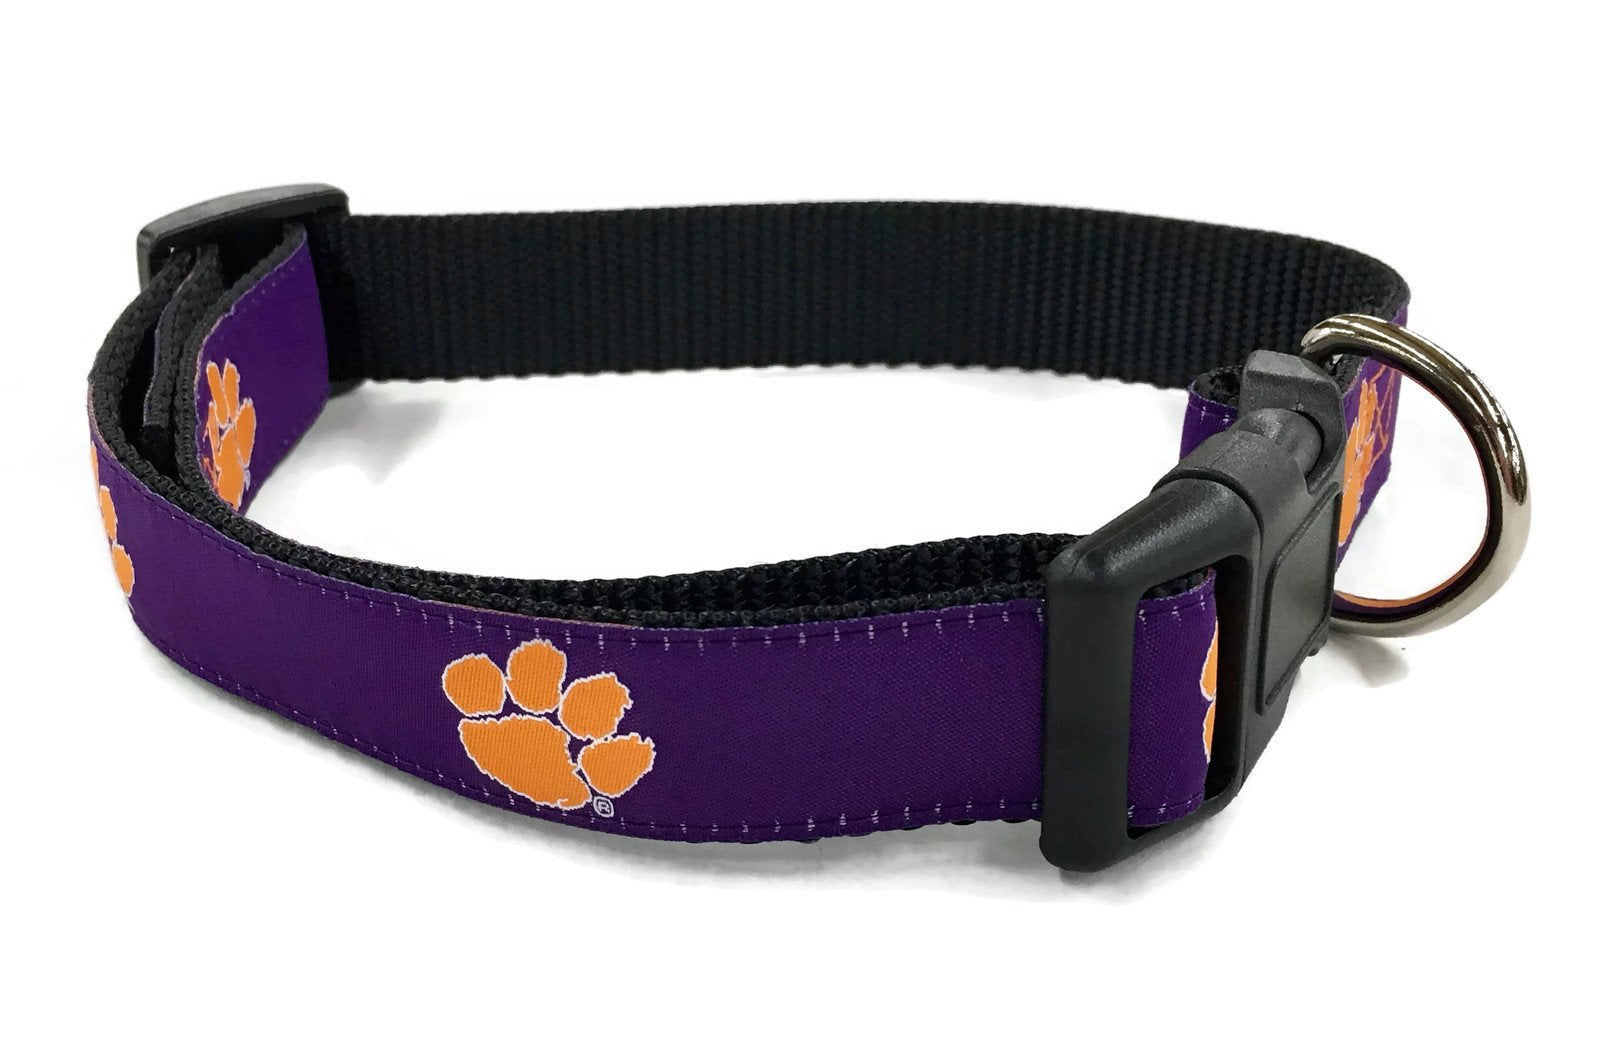 Clemson University Tigers Dog Collar. Officially Licensed Clemson pet collar.